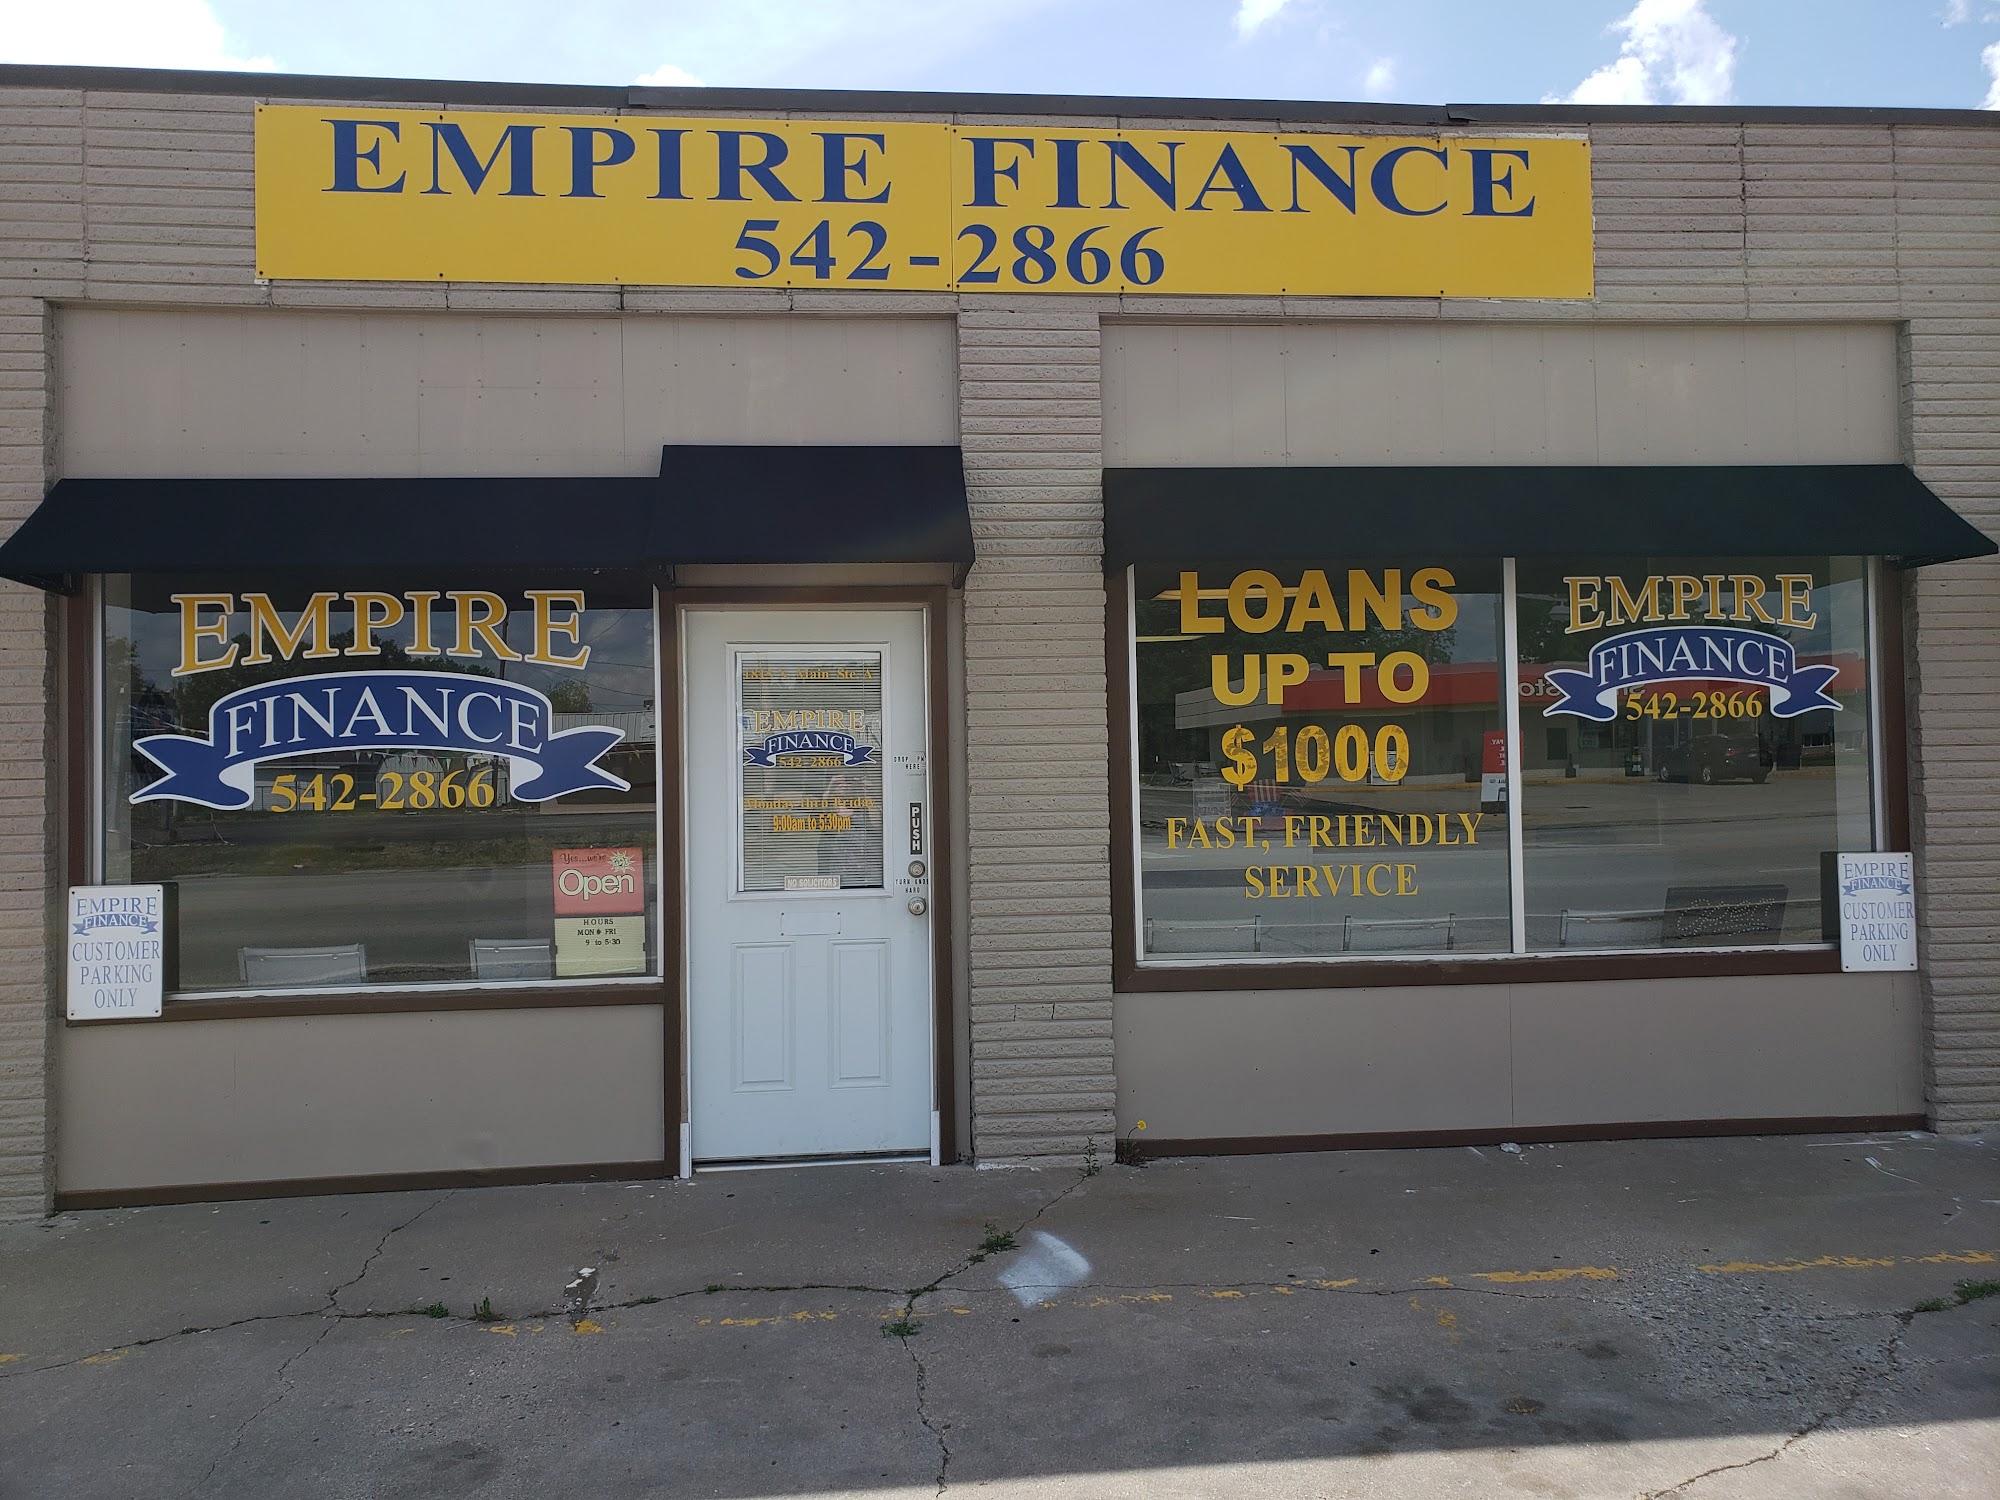 Empire Finance of Miami 1815 N Main St Suite A, Miami Oklahoma 74354